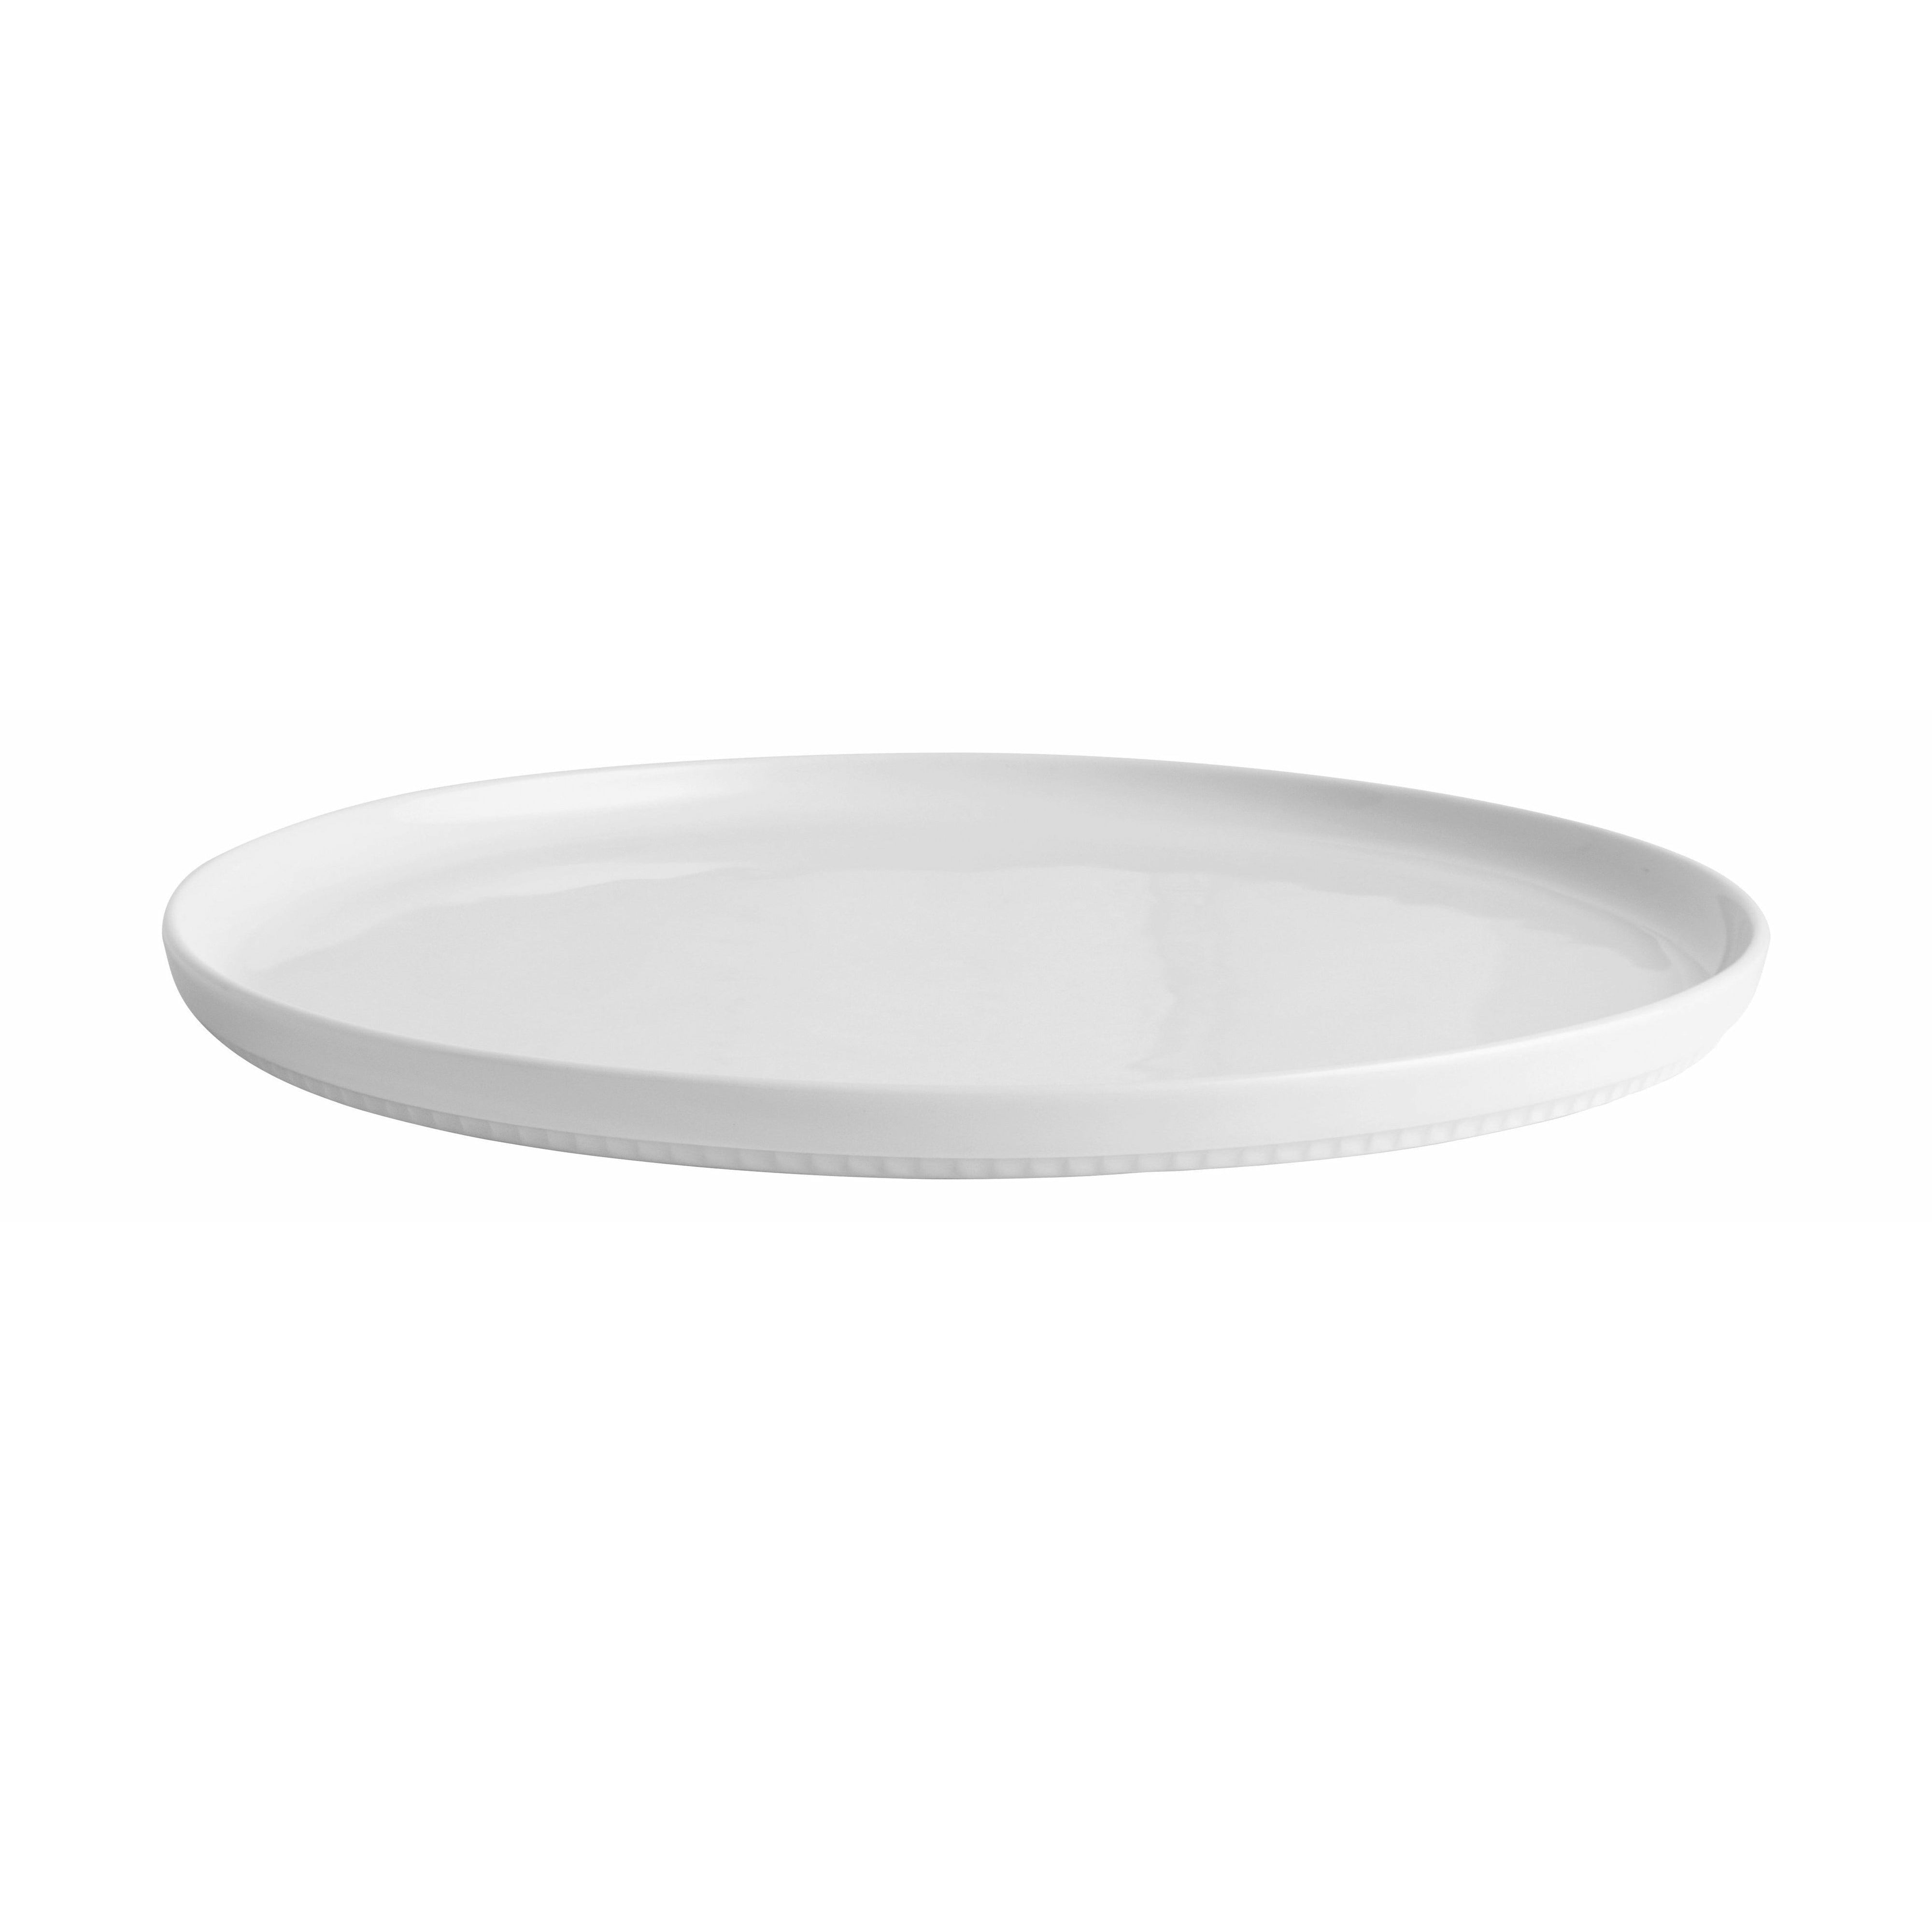 Pillivuyt Toulouse Plate White, 26 cm